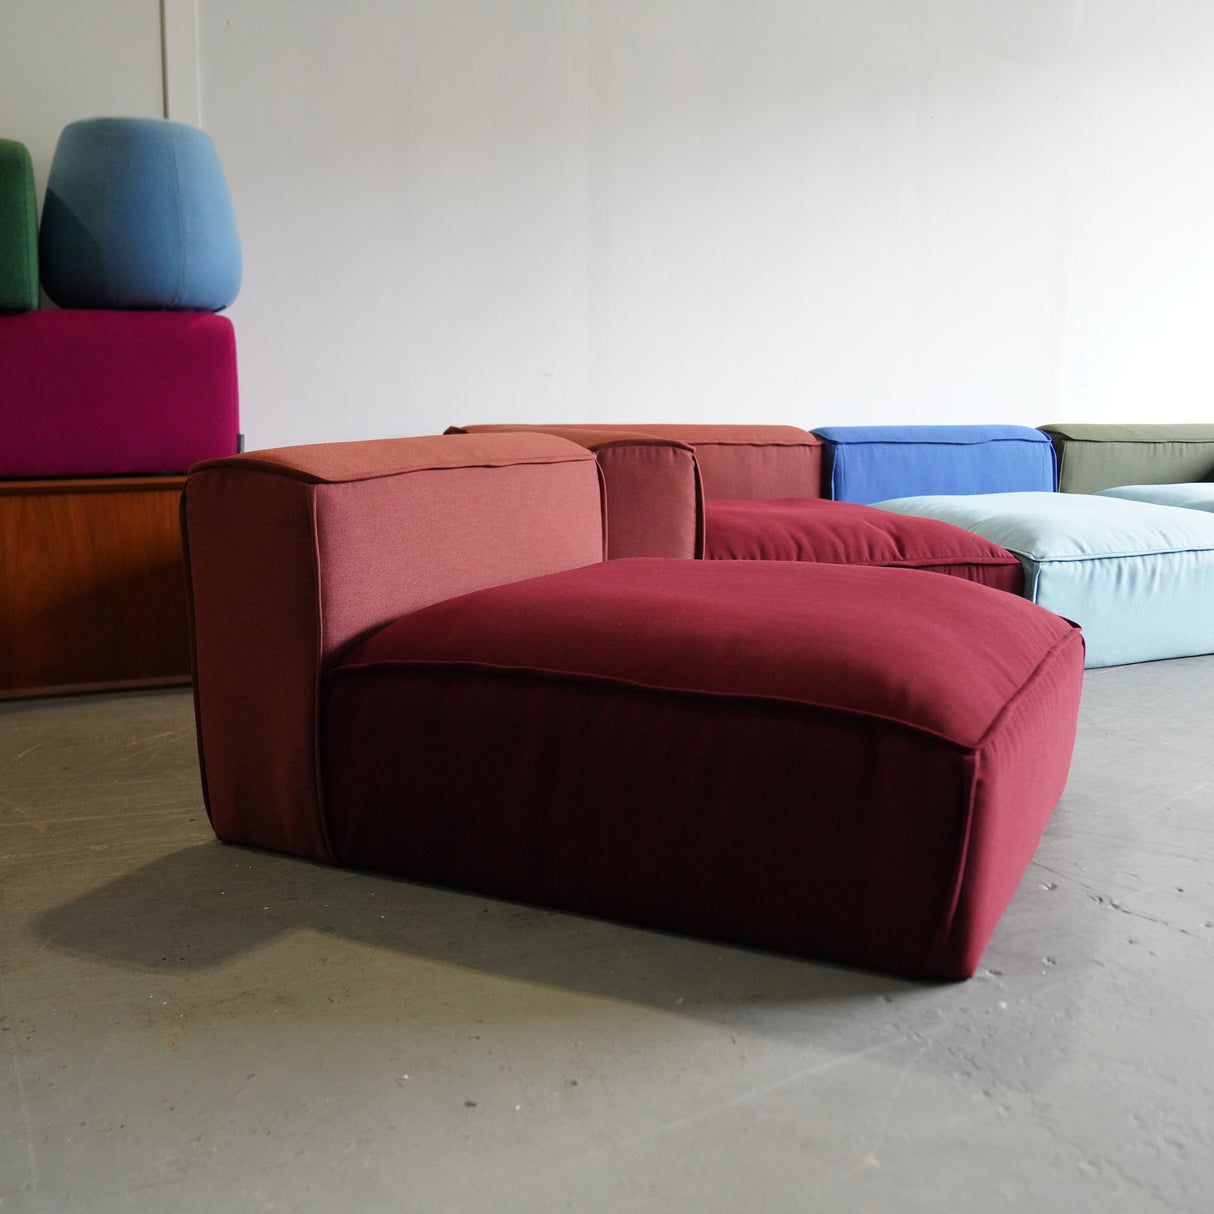 OFS 5 Piece Hinchada Modular sectional sofa